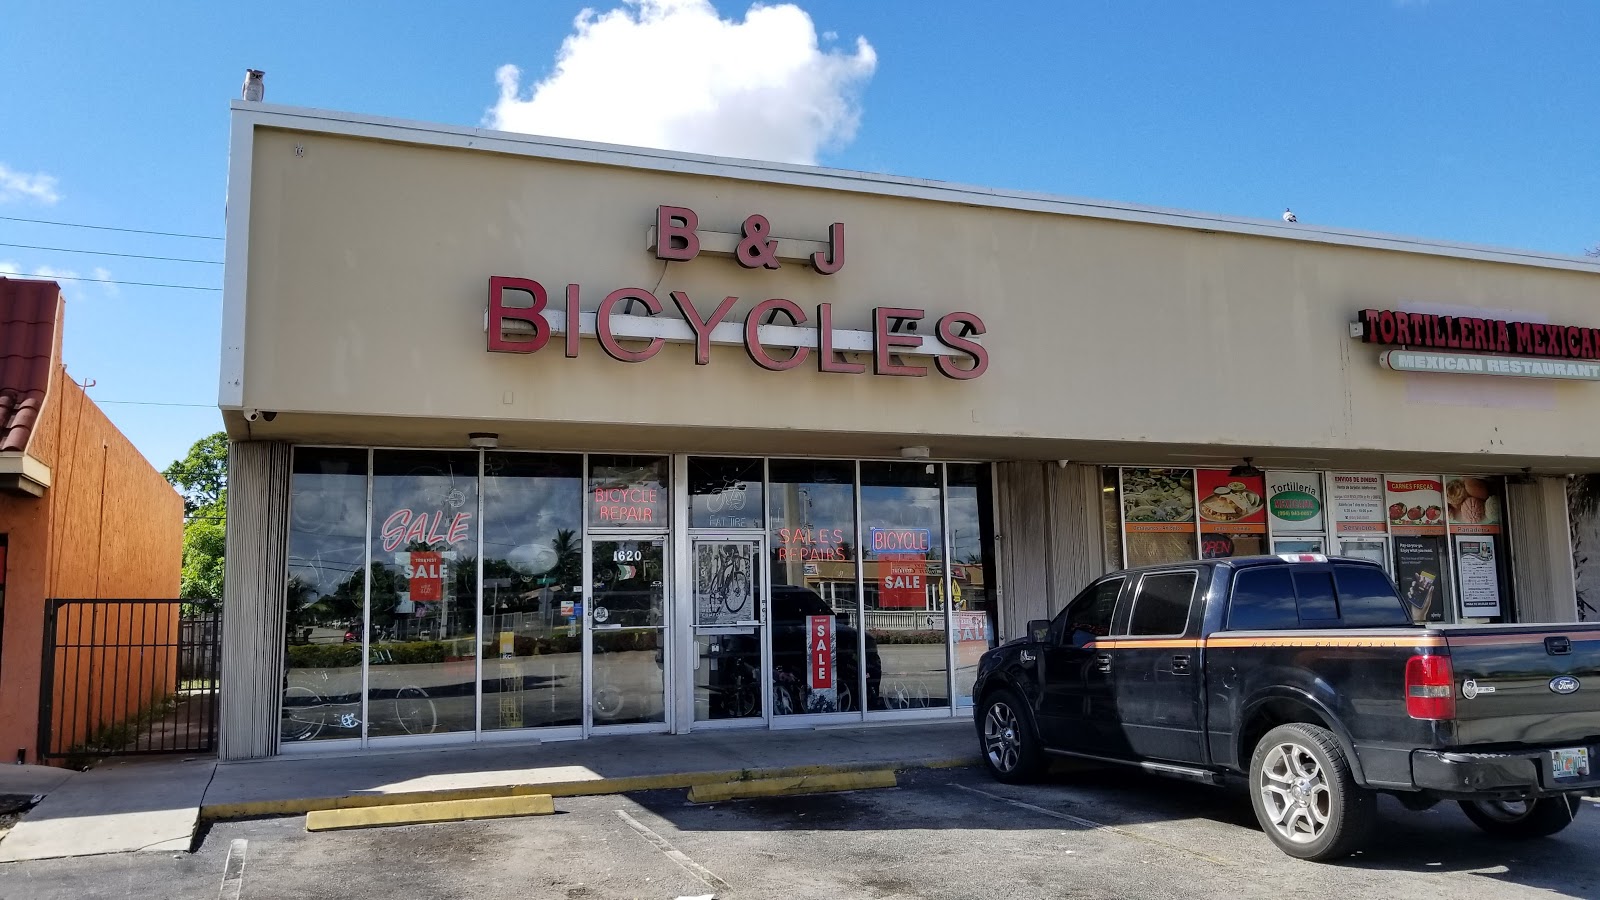 B & J Bicycles